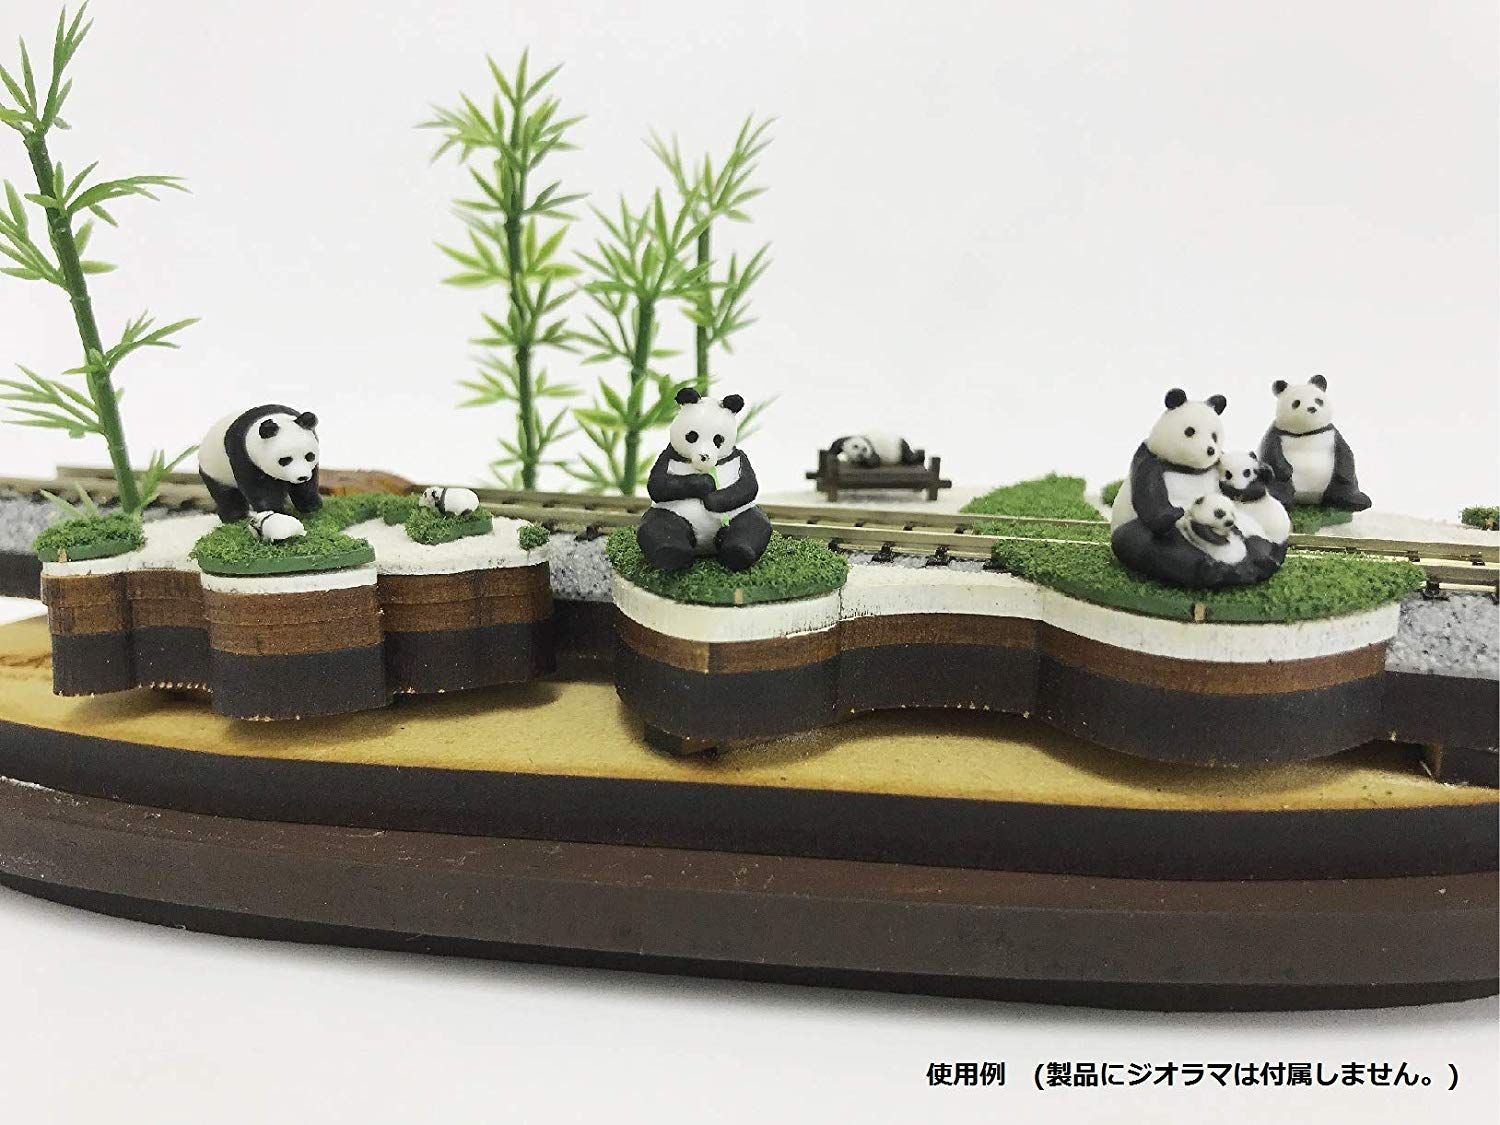 KATO Figuanimal 1/87 Panda Family (7 Pieces) - BanzaiHobby